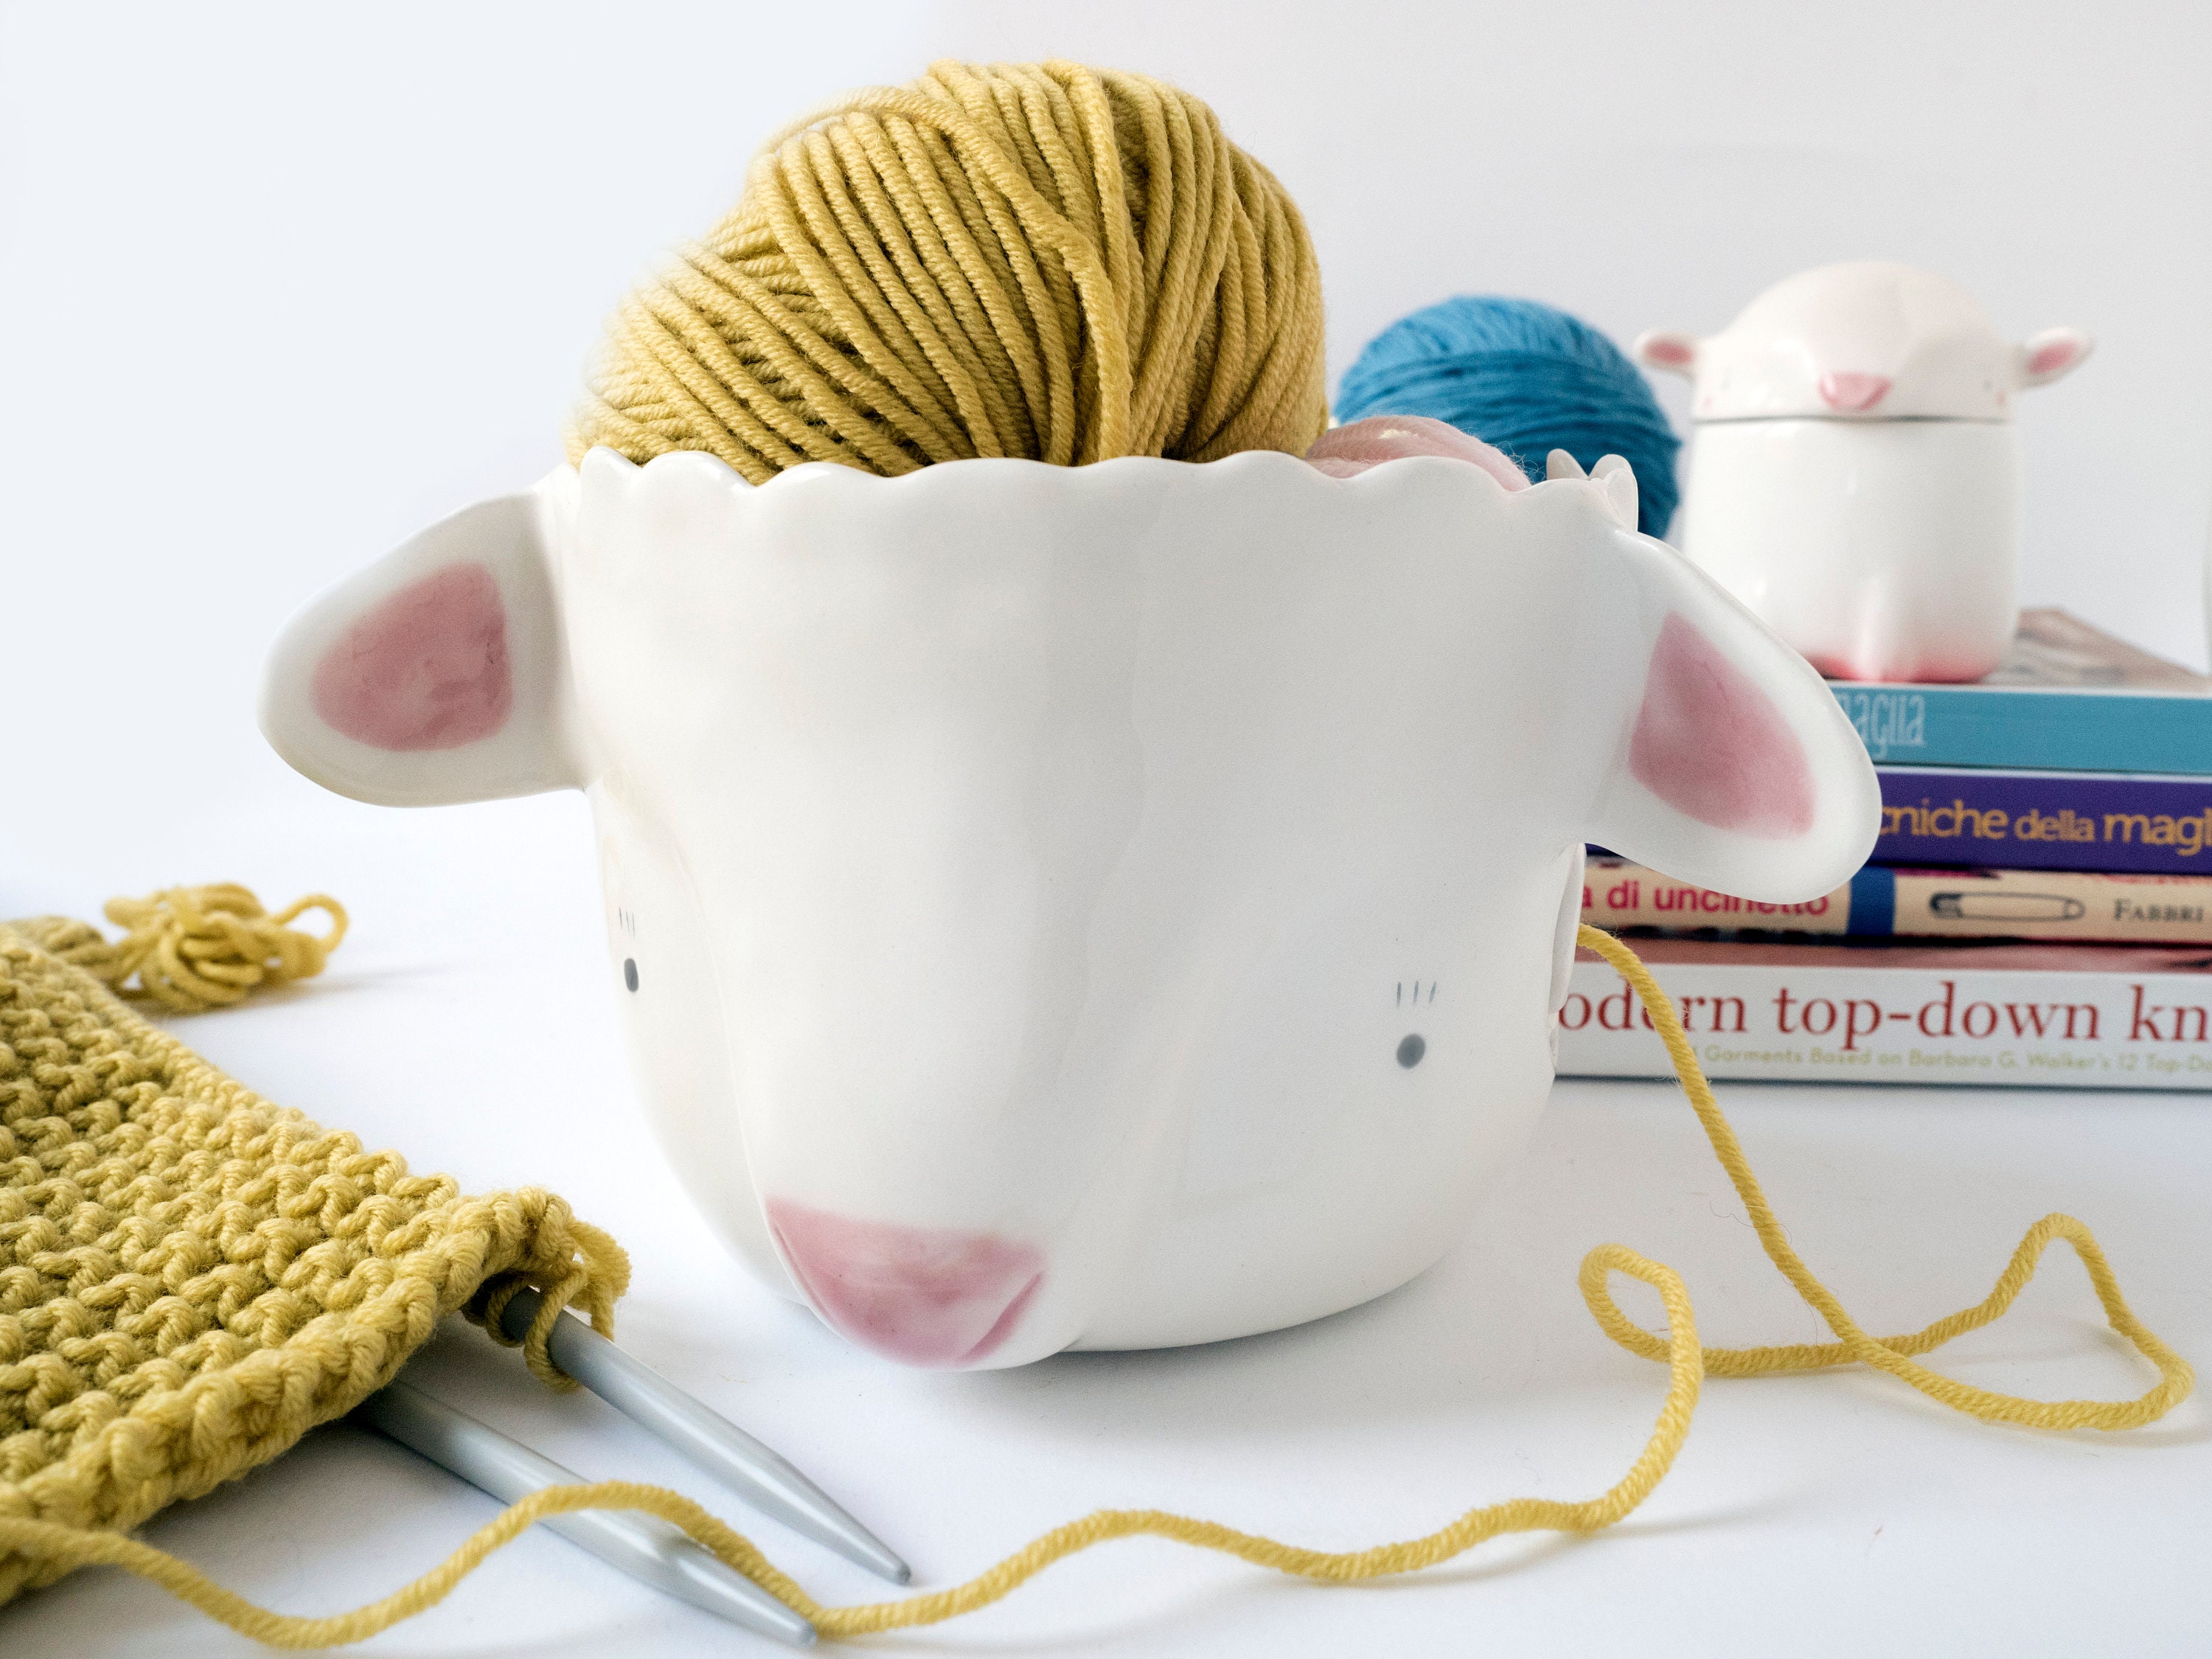 Do you all have/use yarn bowls? : r/YarnAddicts